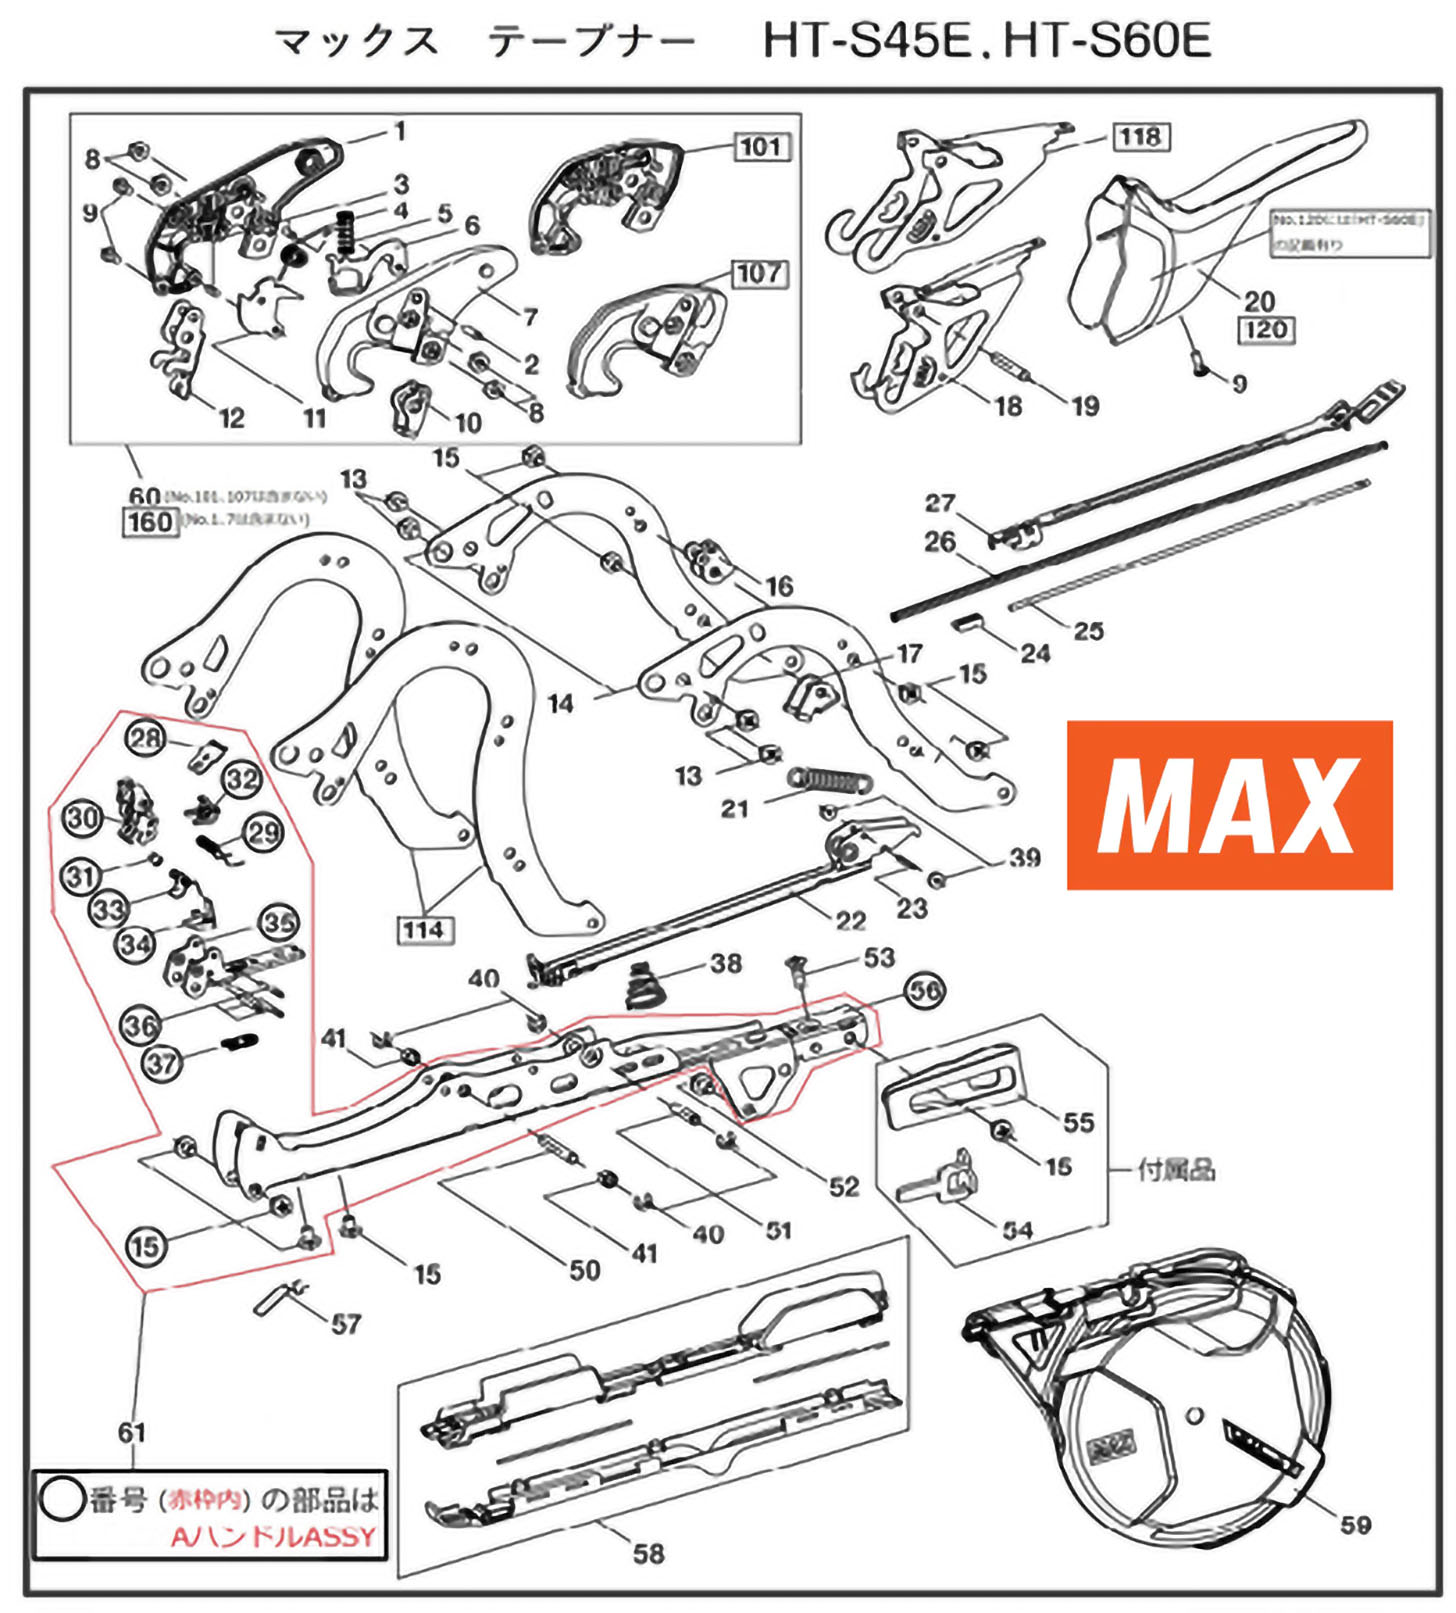 MAX Tapener HT-S45E HT-S60 Parts Diagram